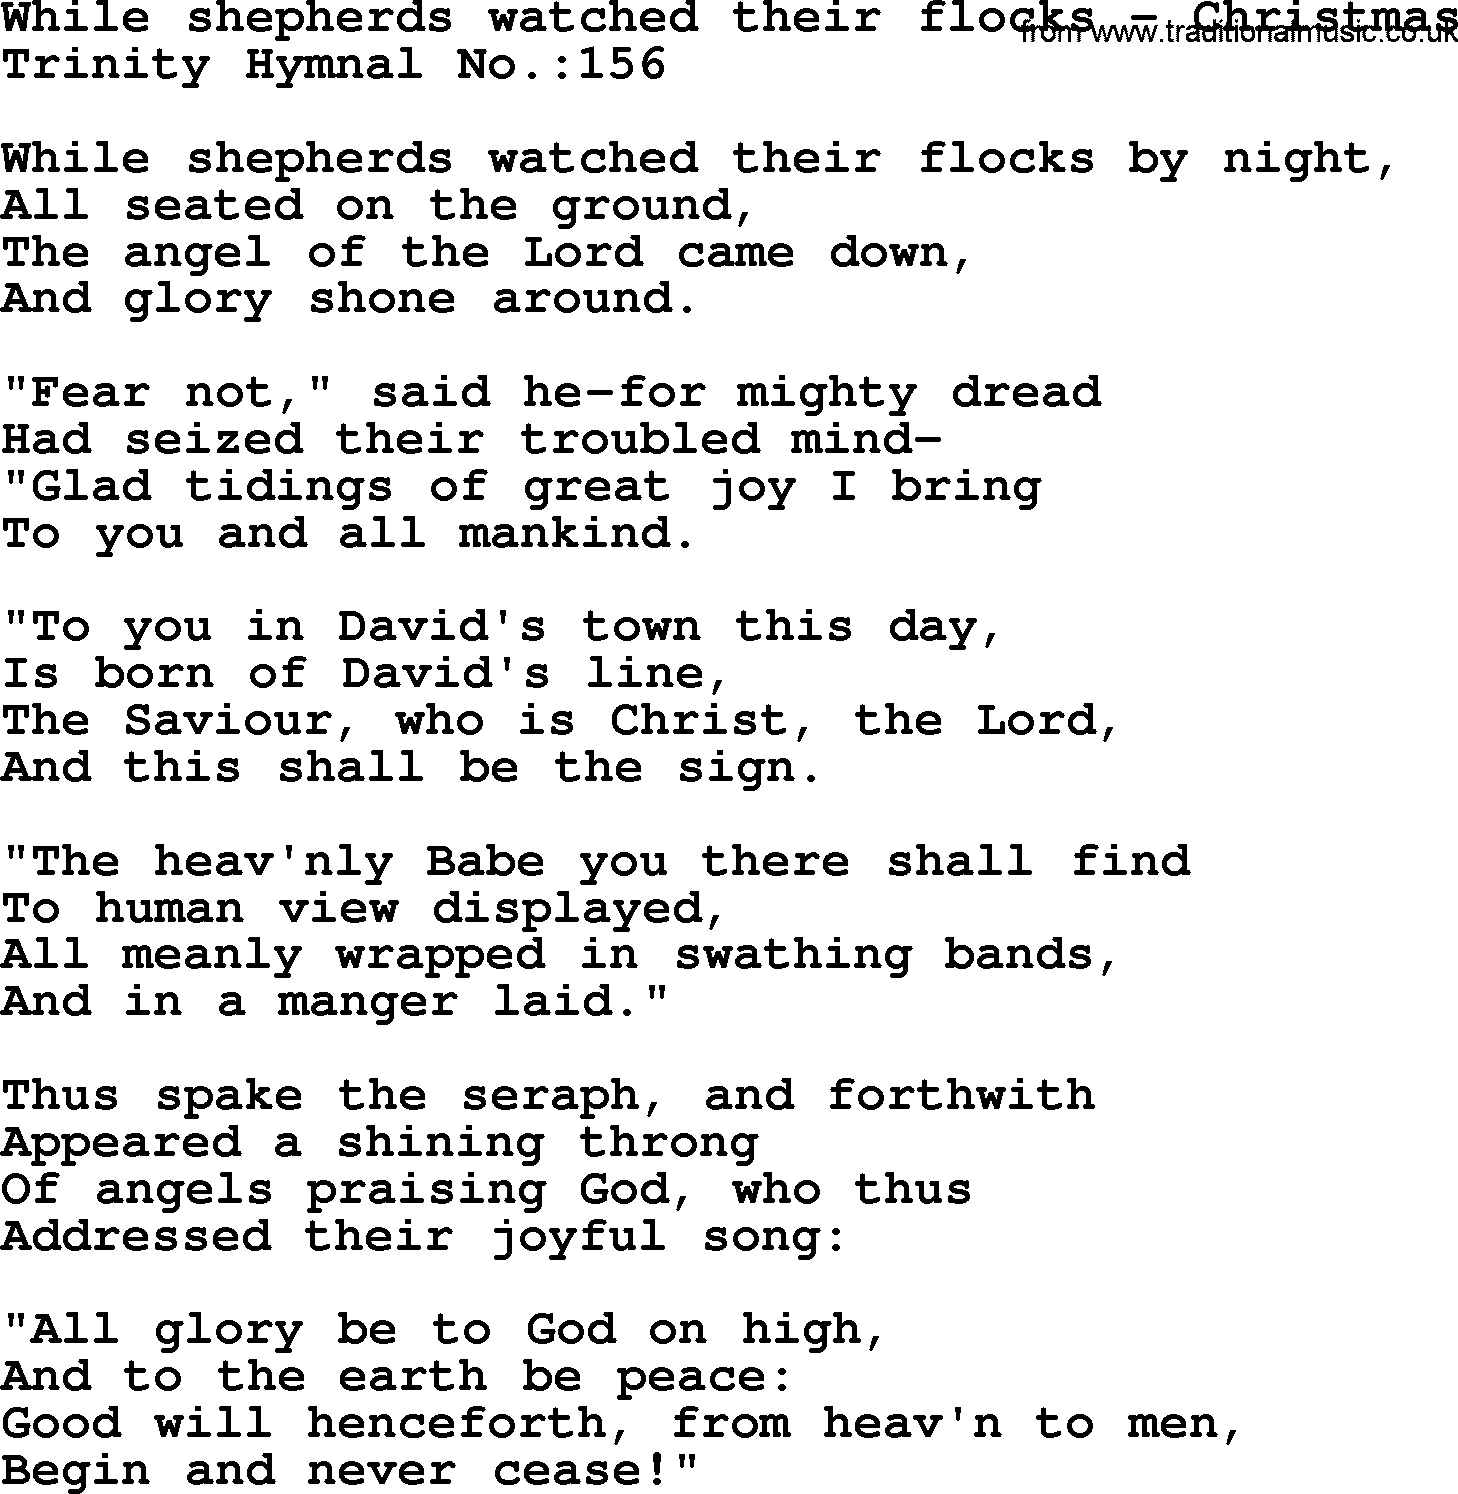 Trinity Hymnal Hymn: While Shepherds Watched Their Flocks--Christmas, lyrics with midi music